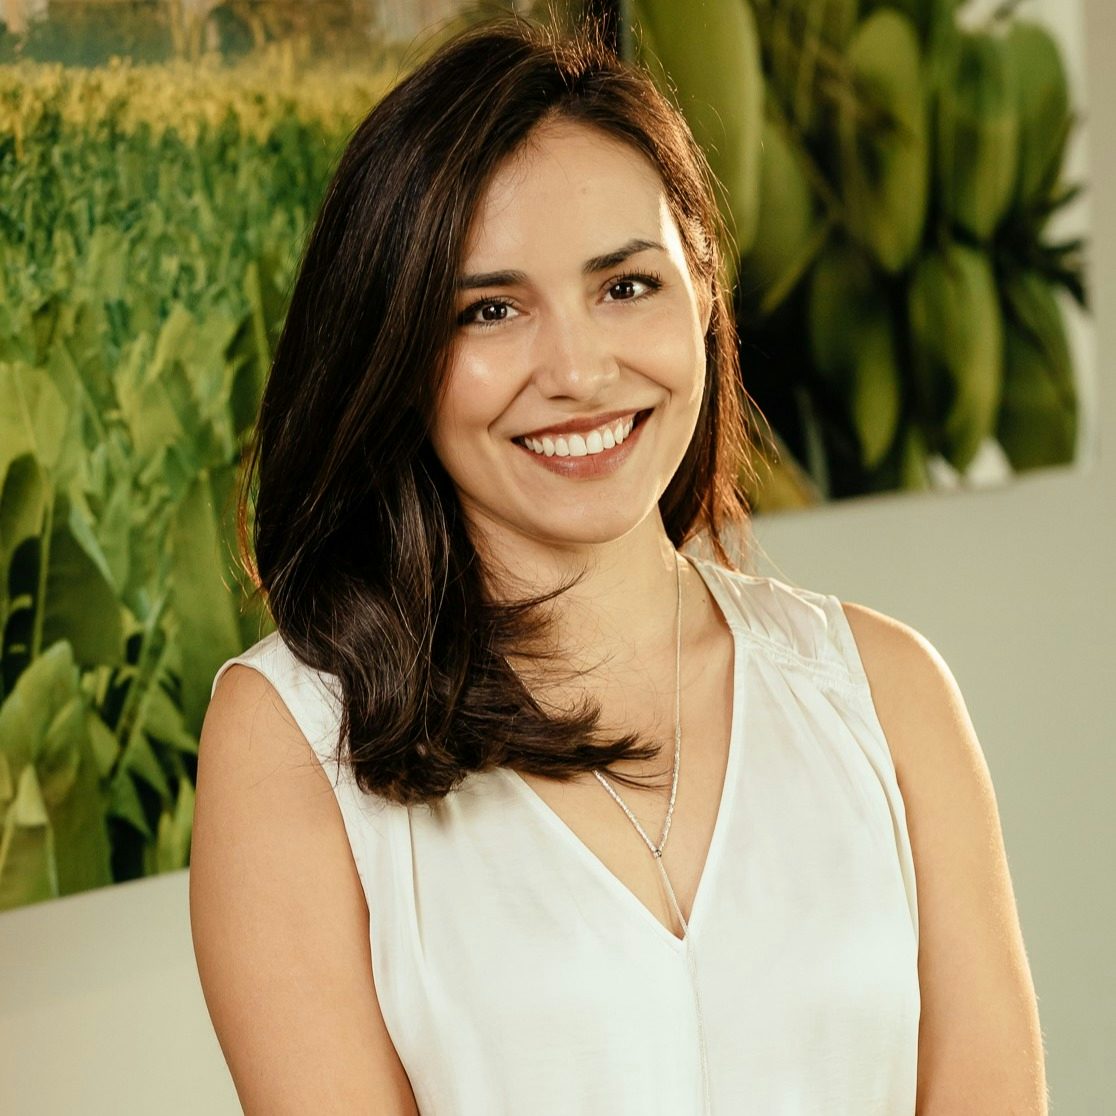 Travel Advisor Daniella Velazquez de Leon wears a white tank top and smiles in front of a green plant